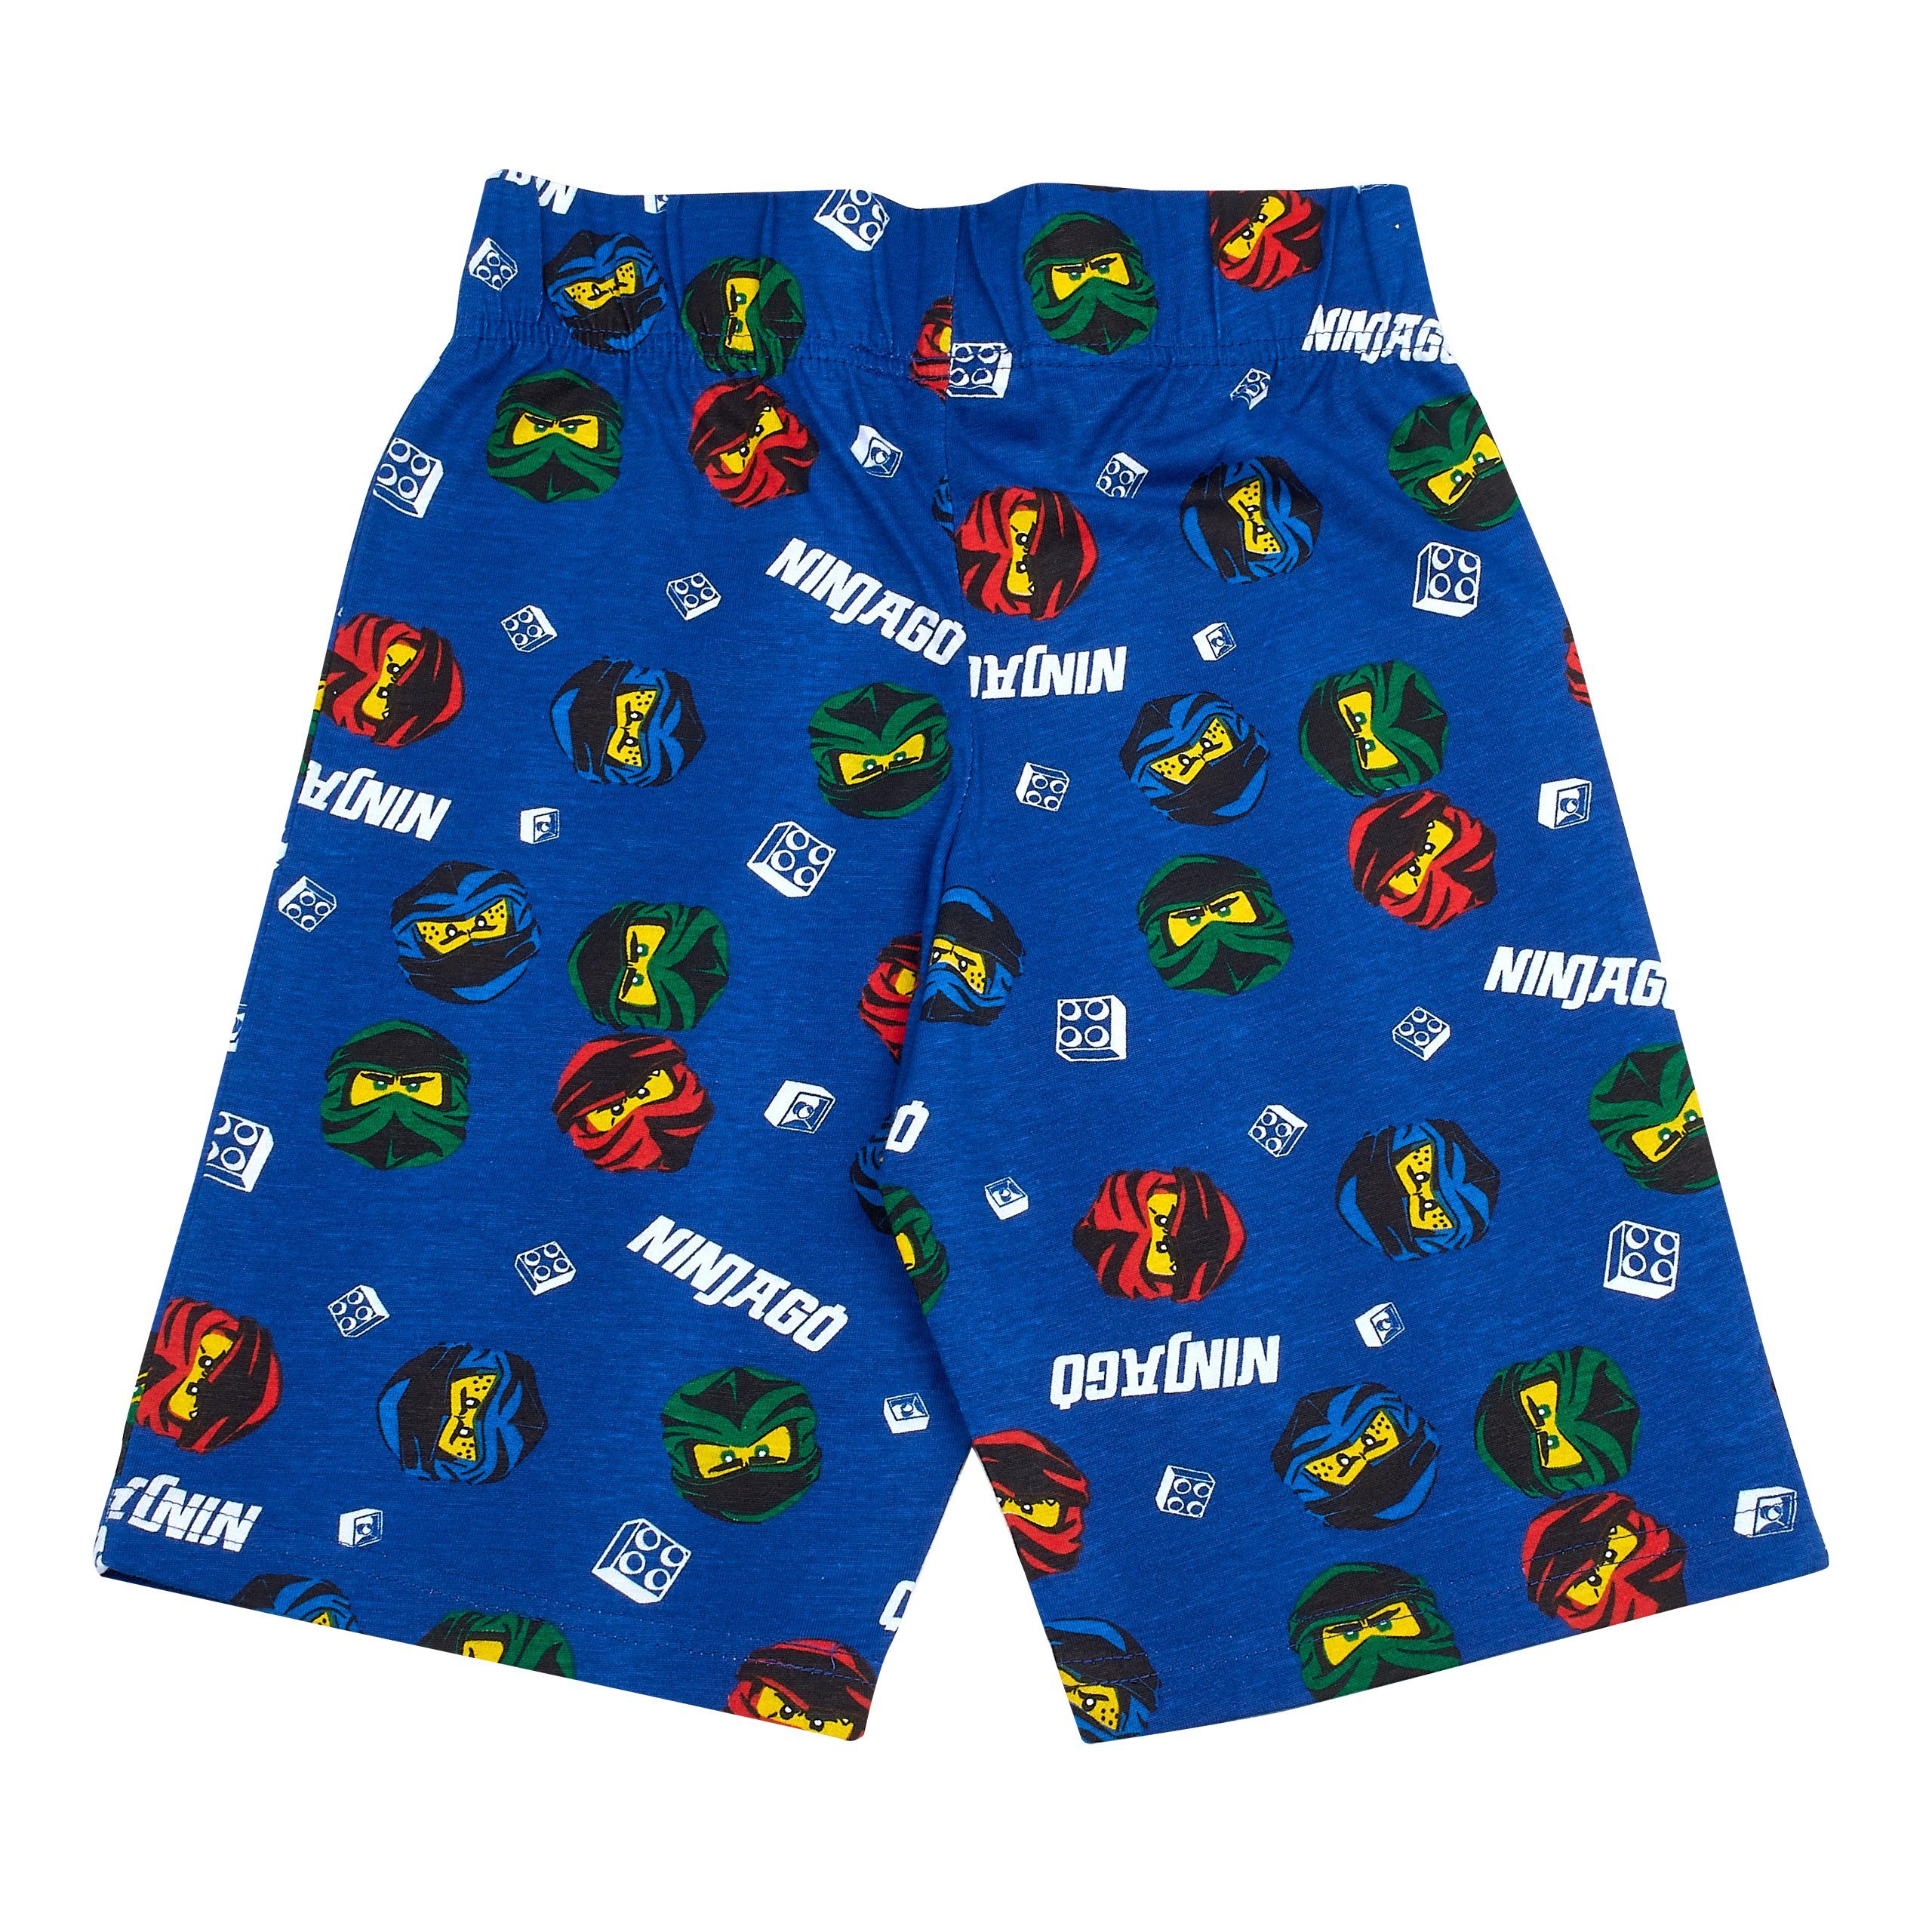 LEGO Pyjama kurzarm Schlafanzug LEGO® Pyjama Ninjago